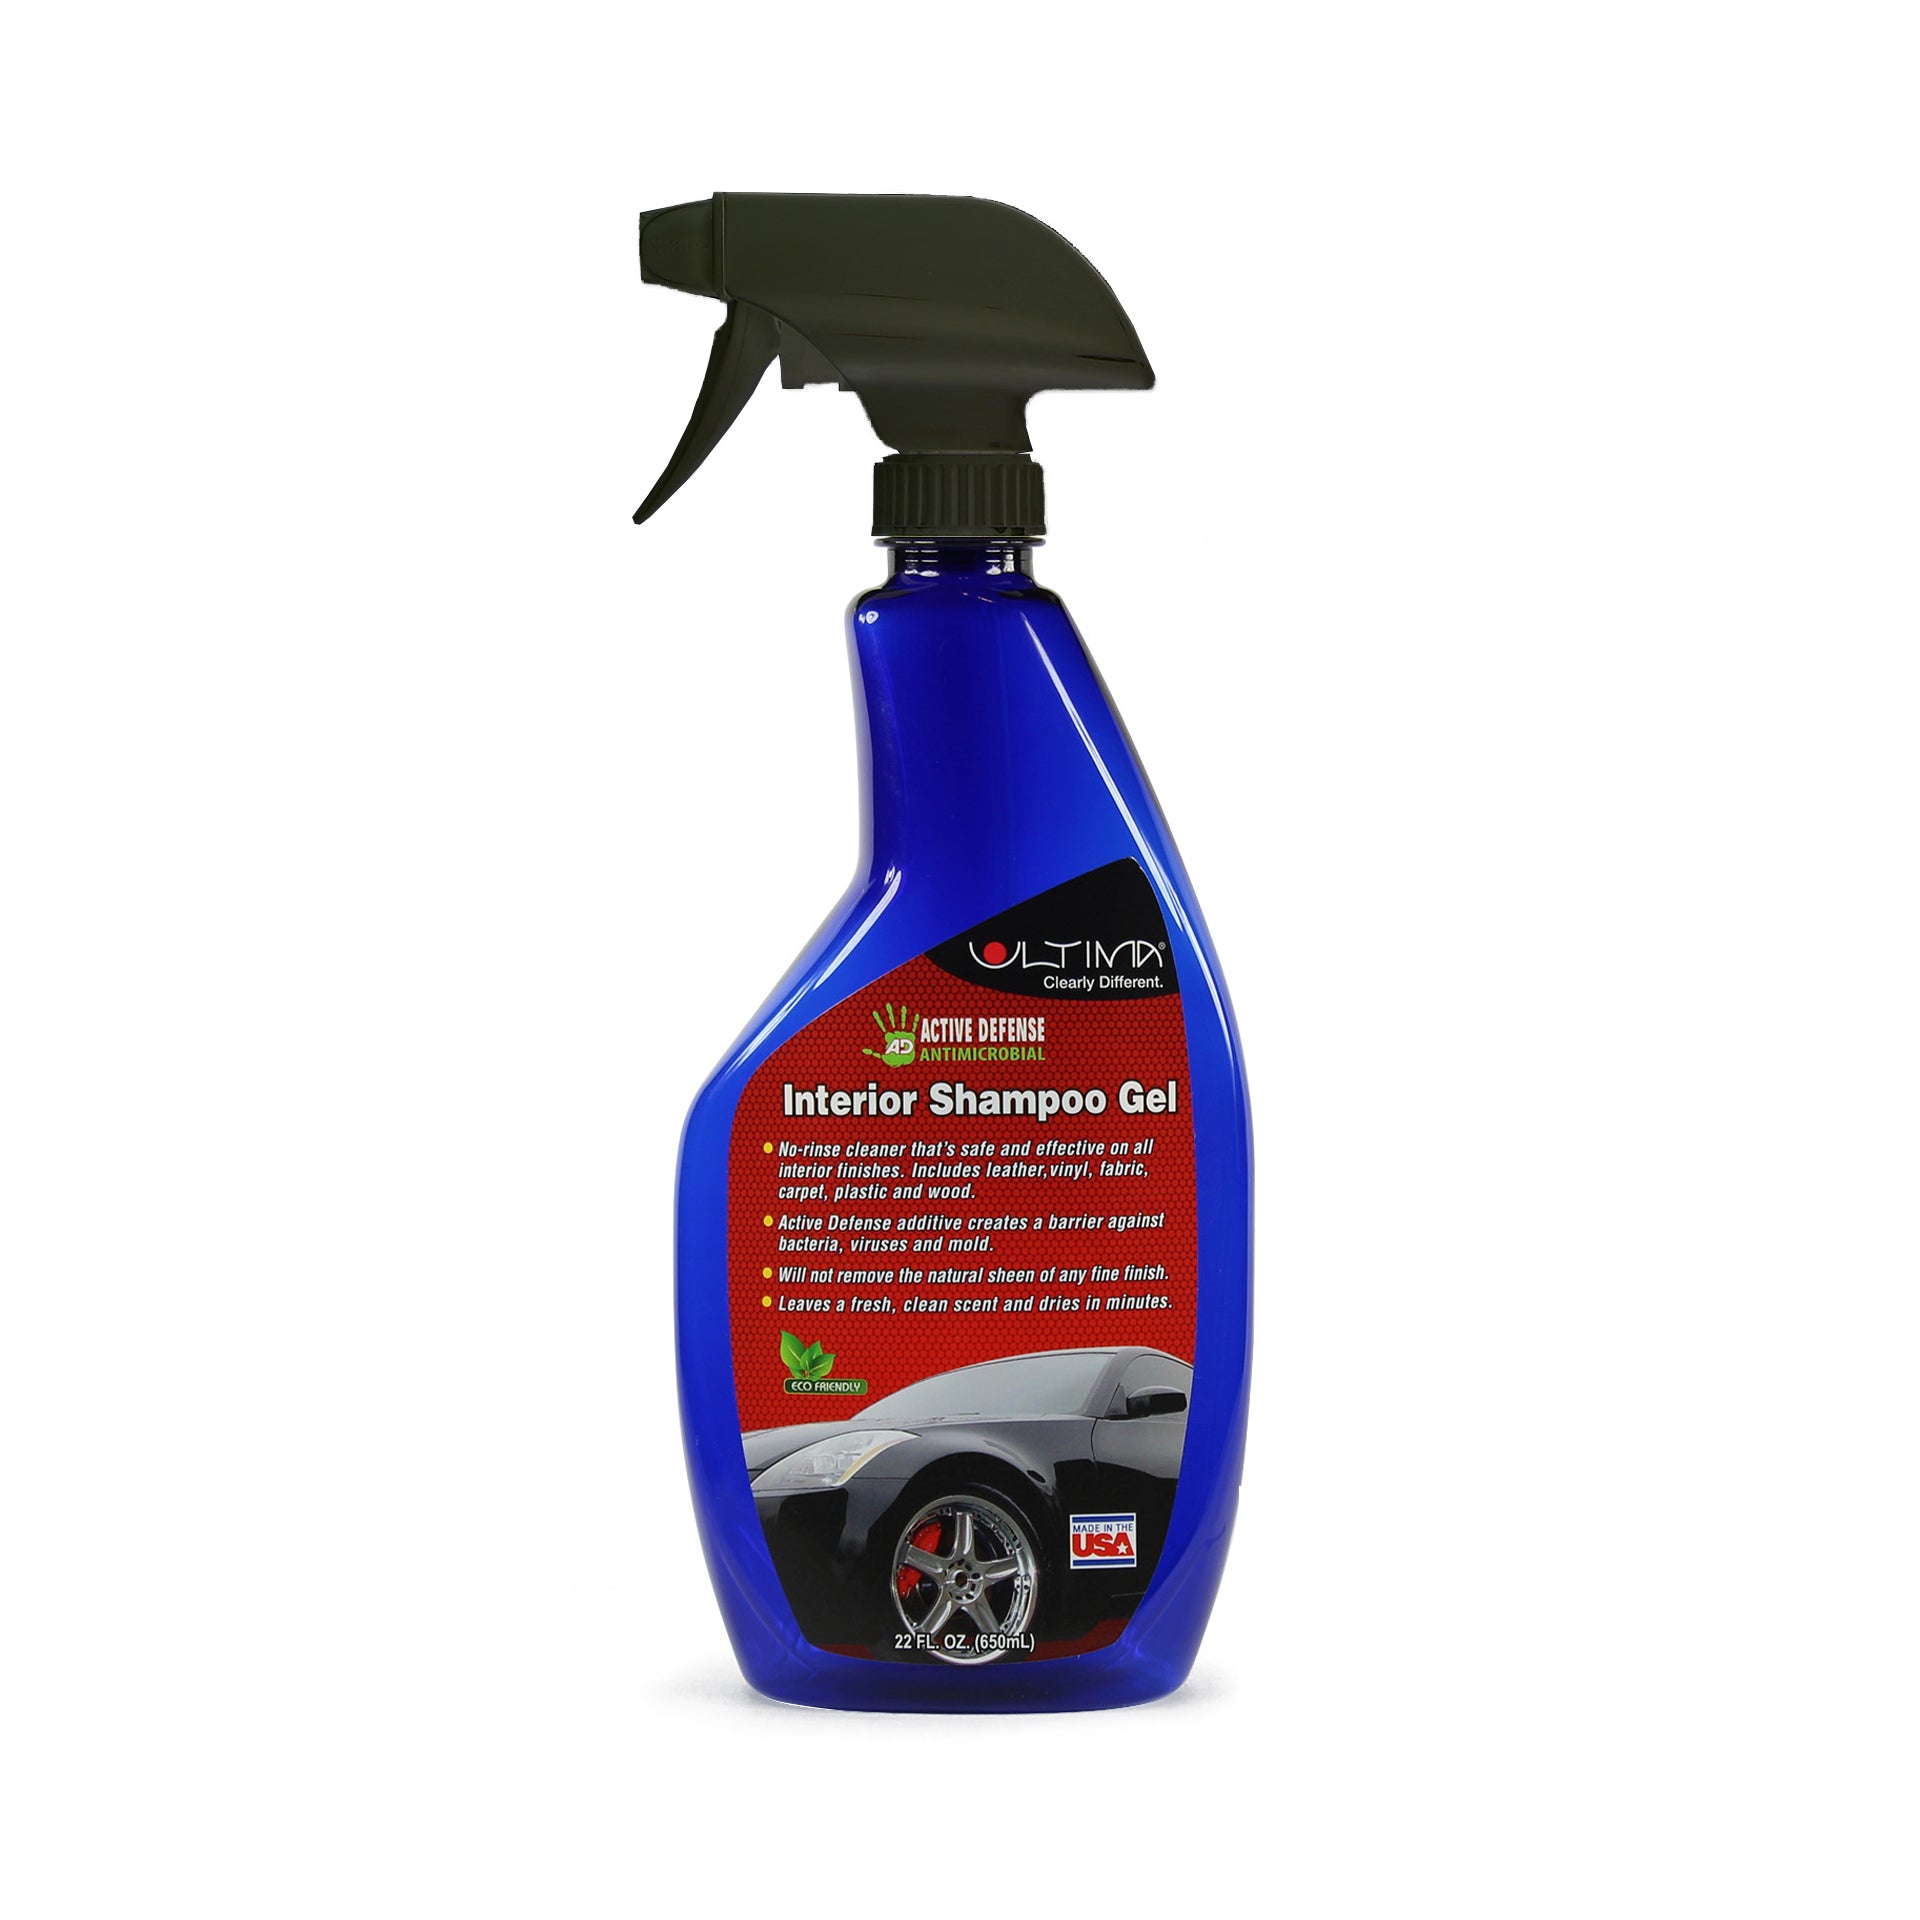 Sky's the Limit Car Care - Ultima interior shampoo gel offers the